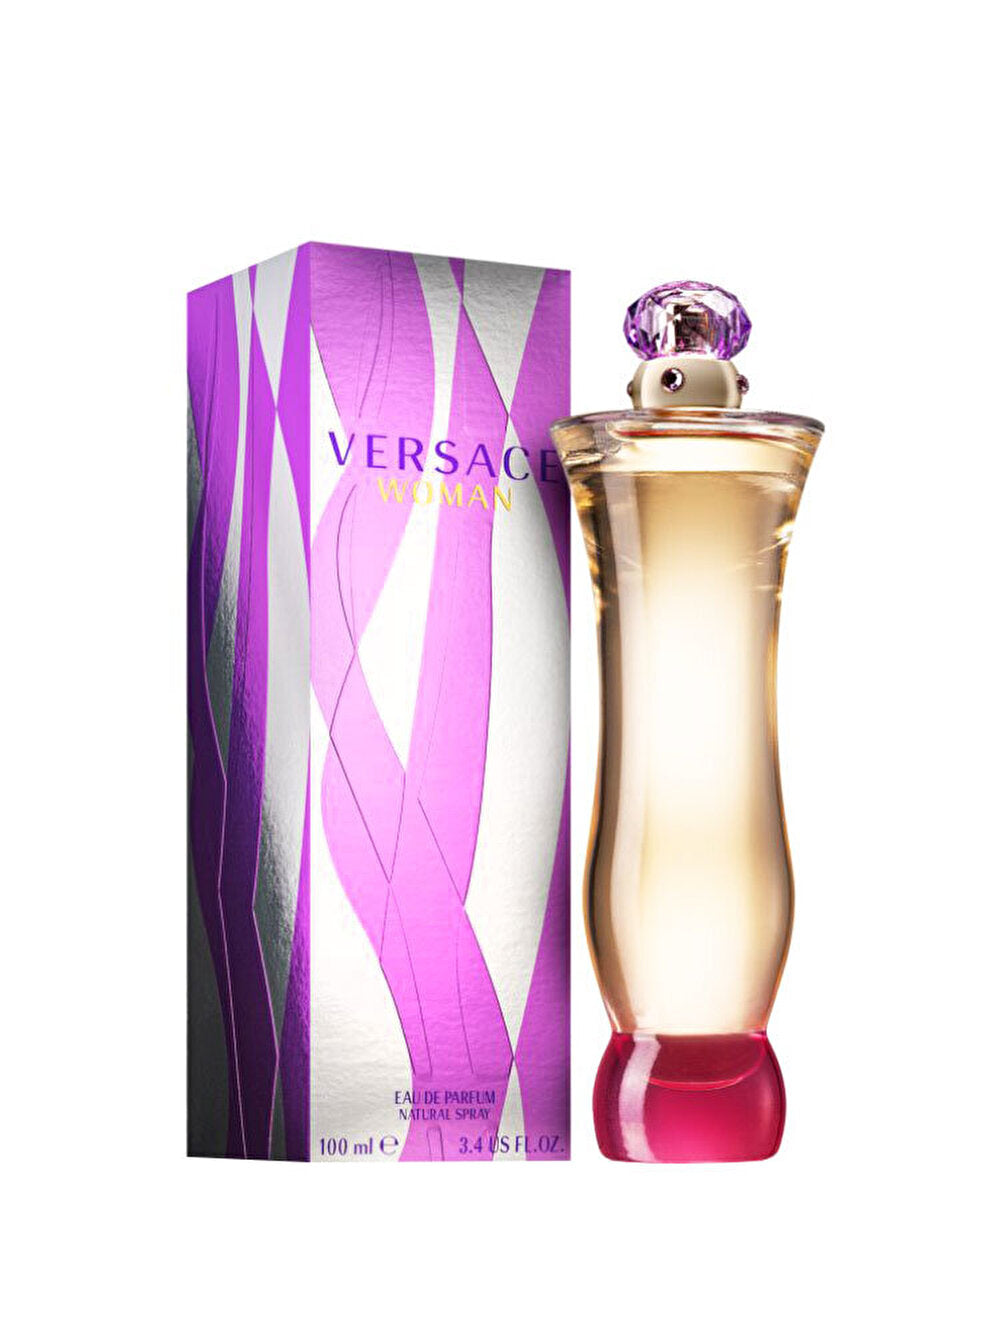 Versace woman eau de parfum spray